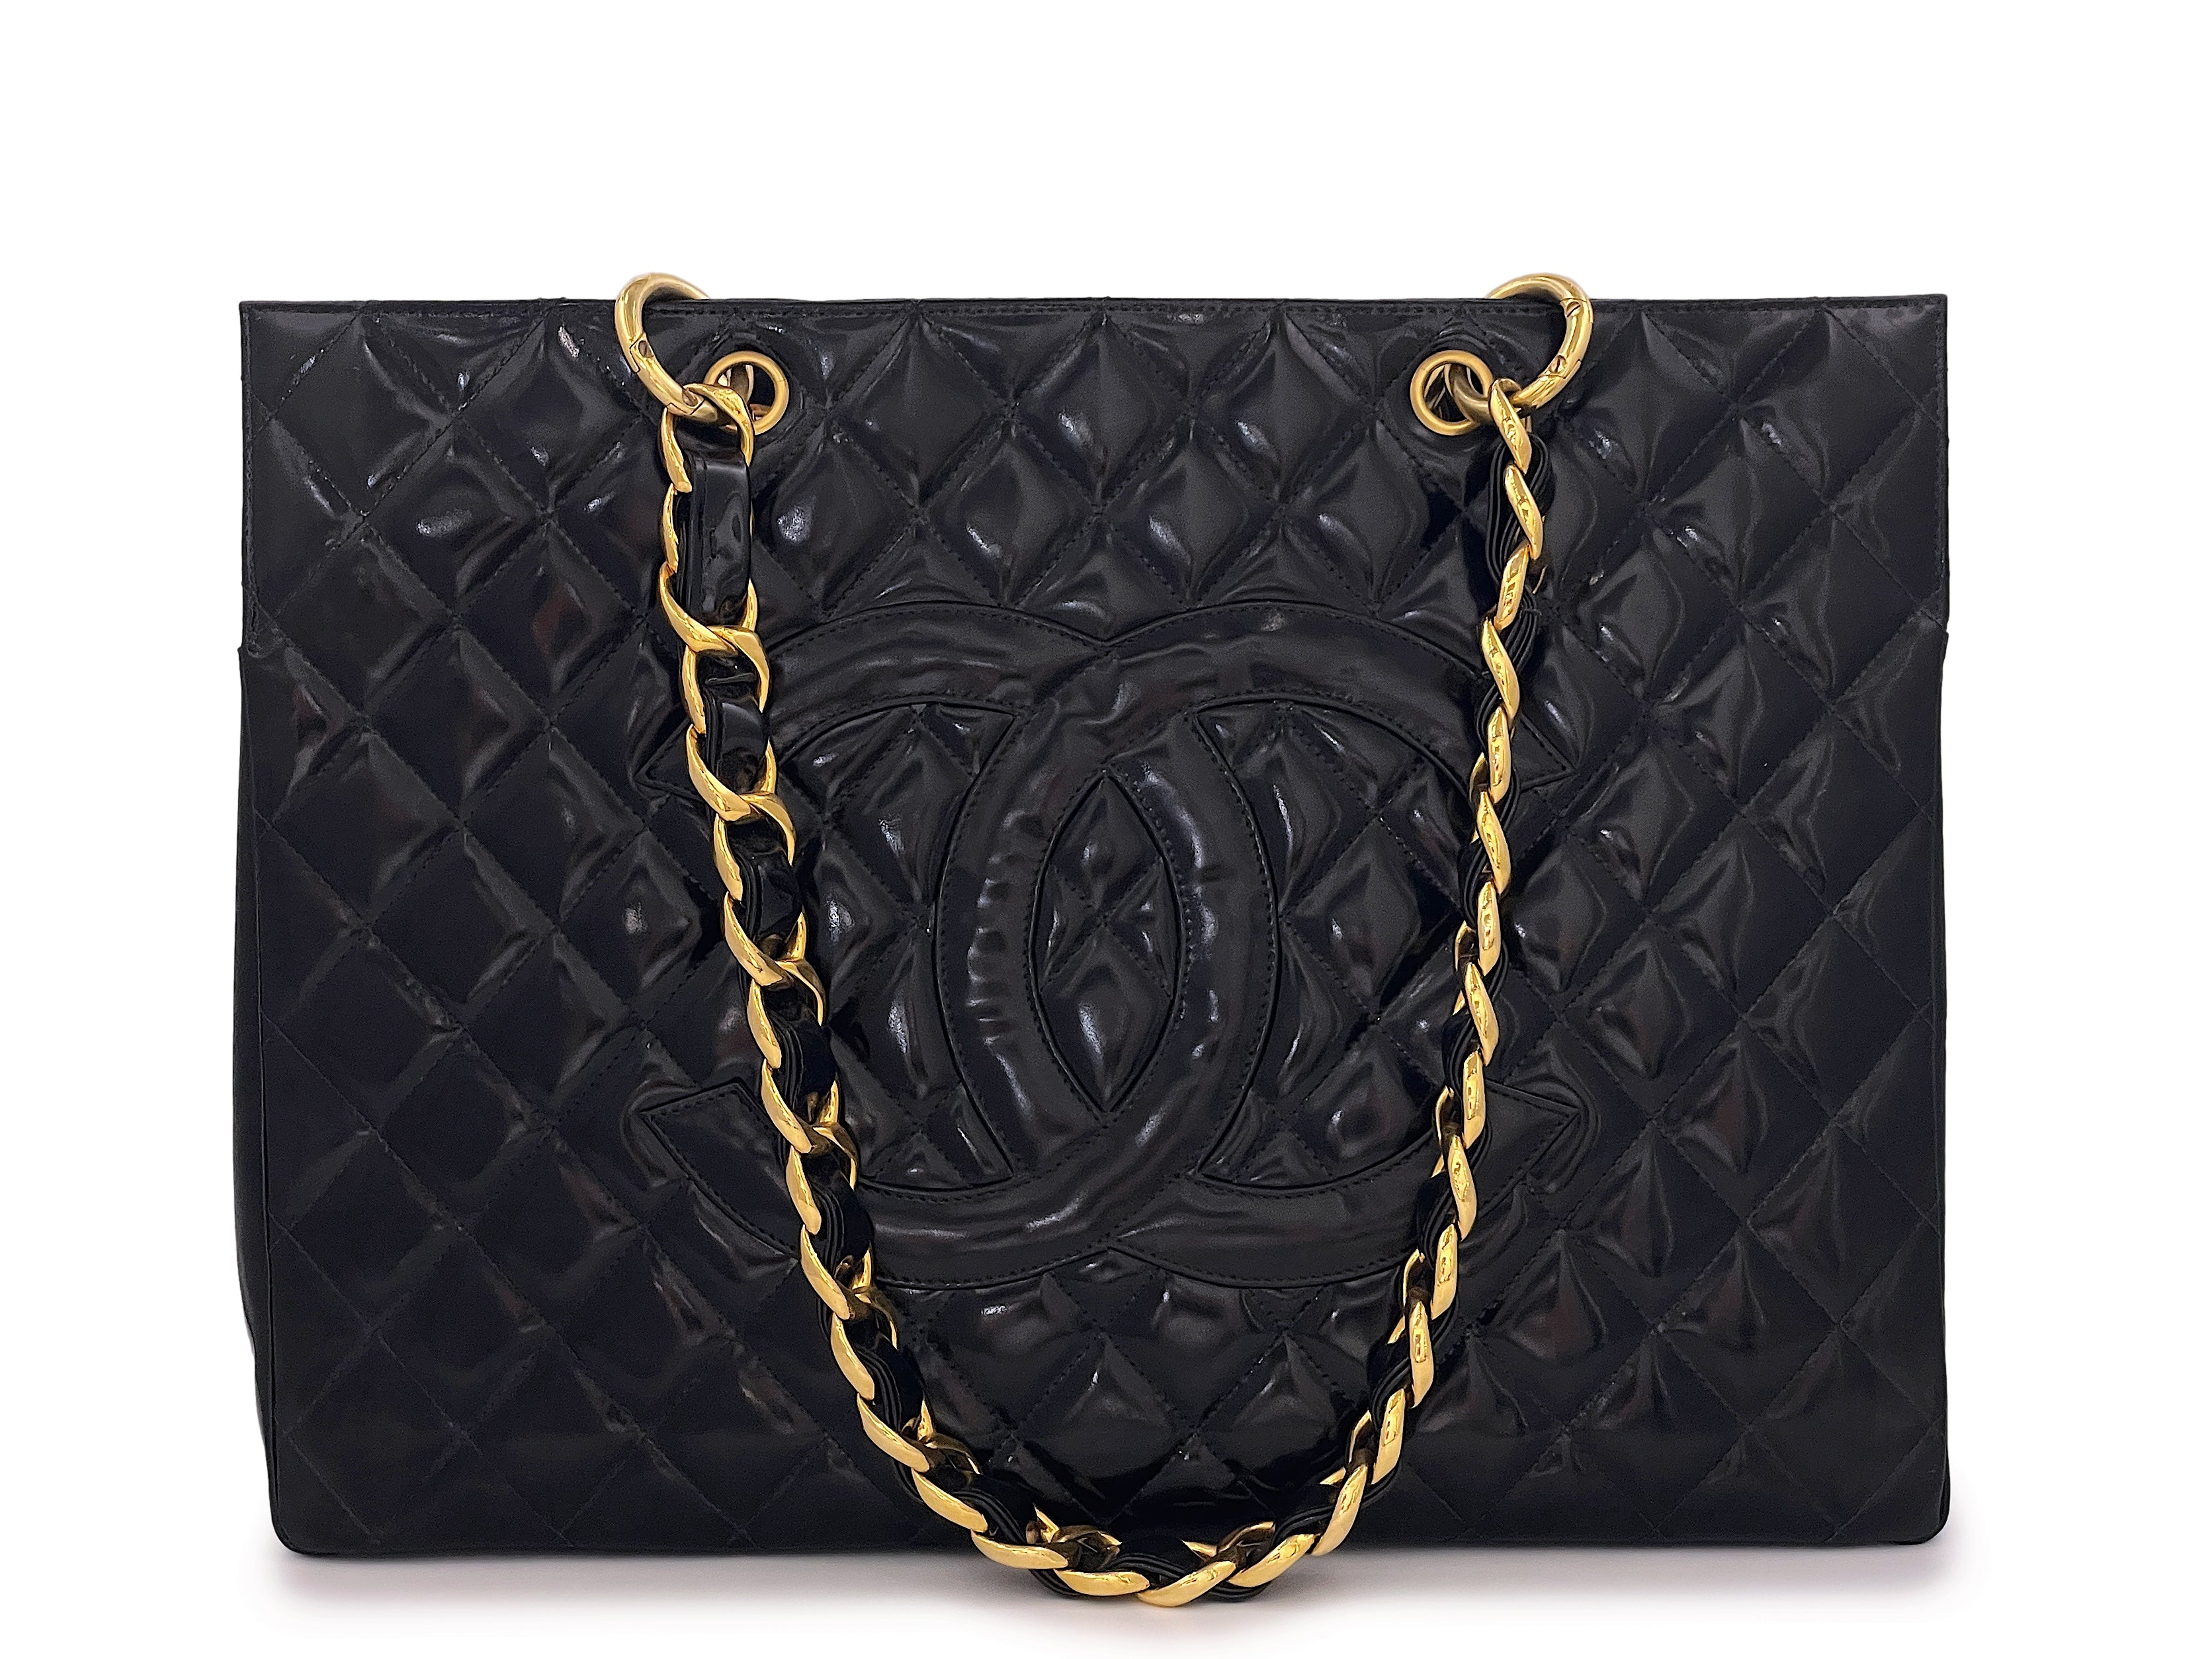 Rare Chanel Black Vintage Patent Original Grand Shopper GST Tote Bag